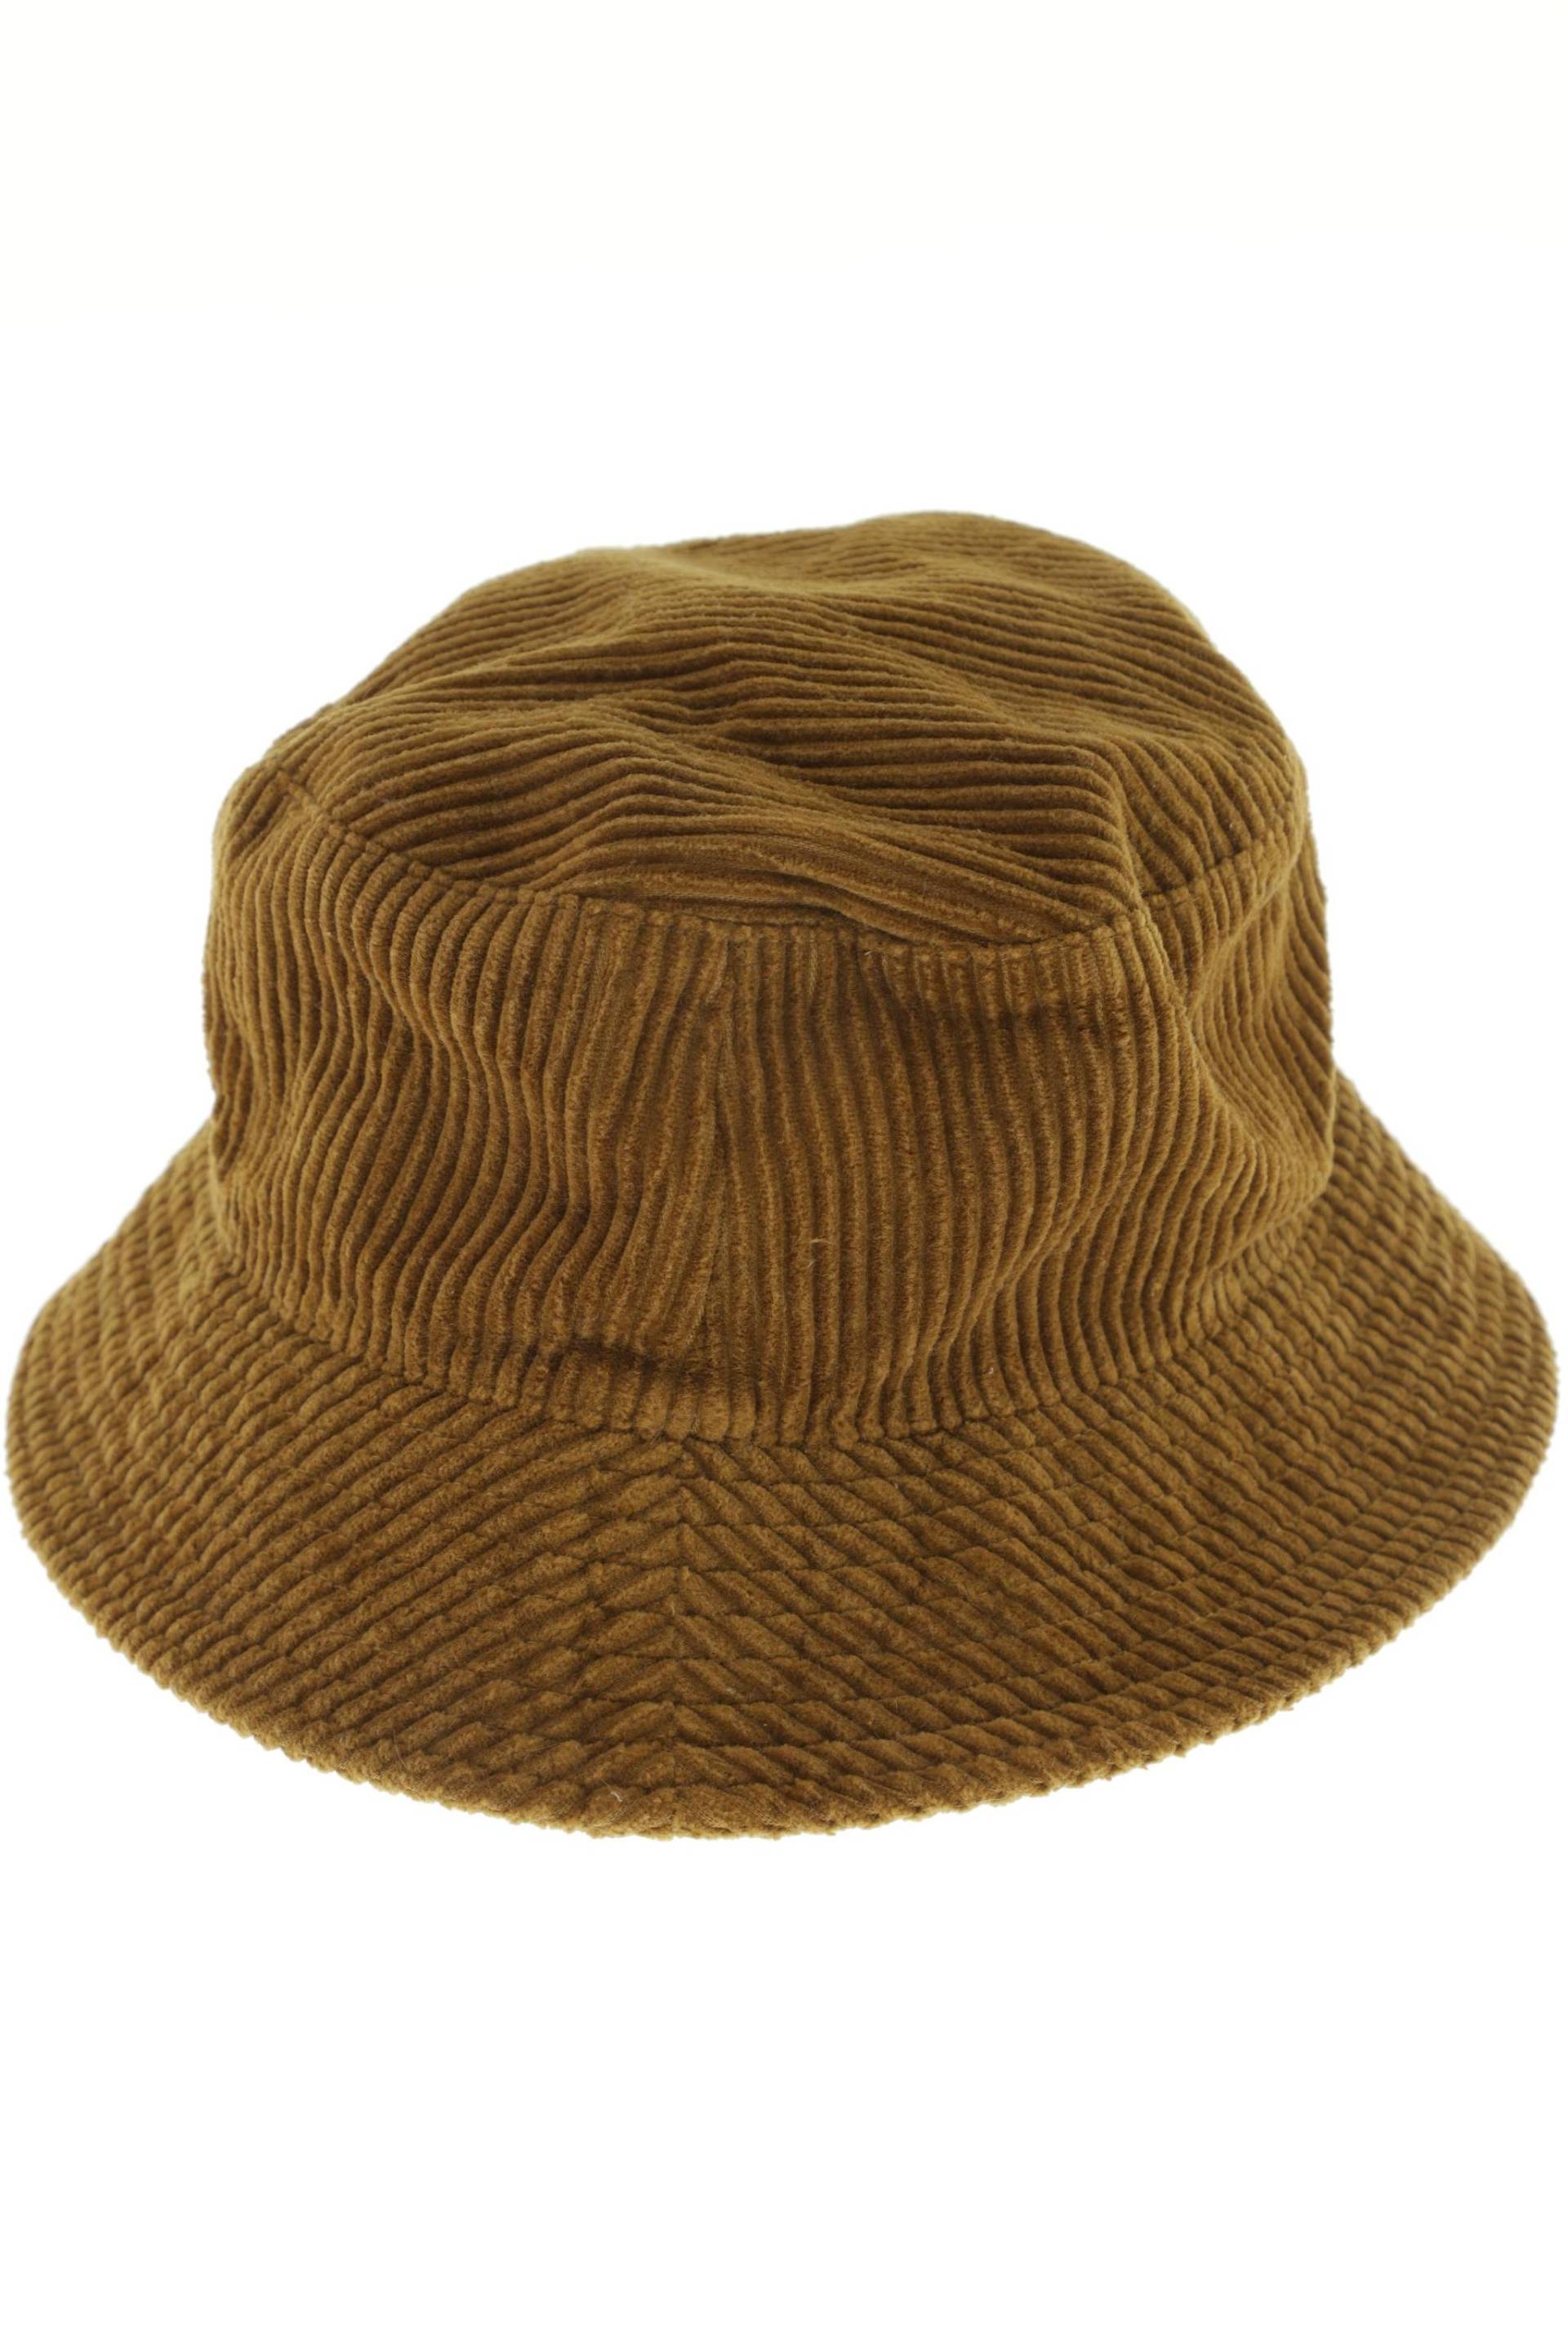 Marc O Polo Damen Hut/Mütze, braun von Marc O Polo